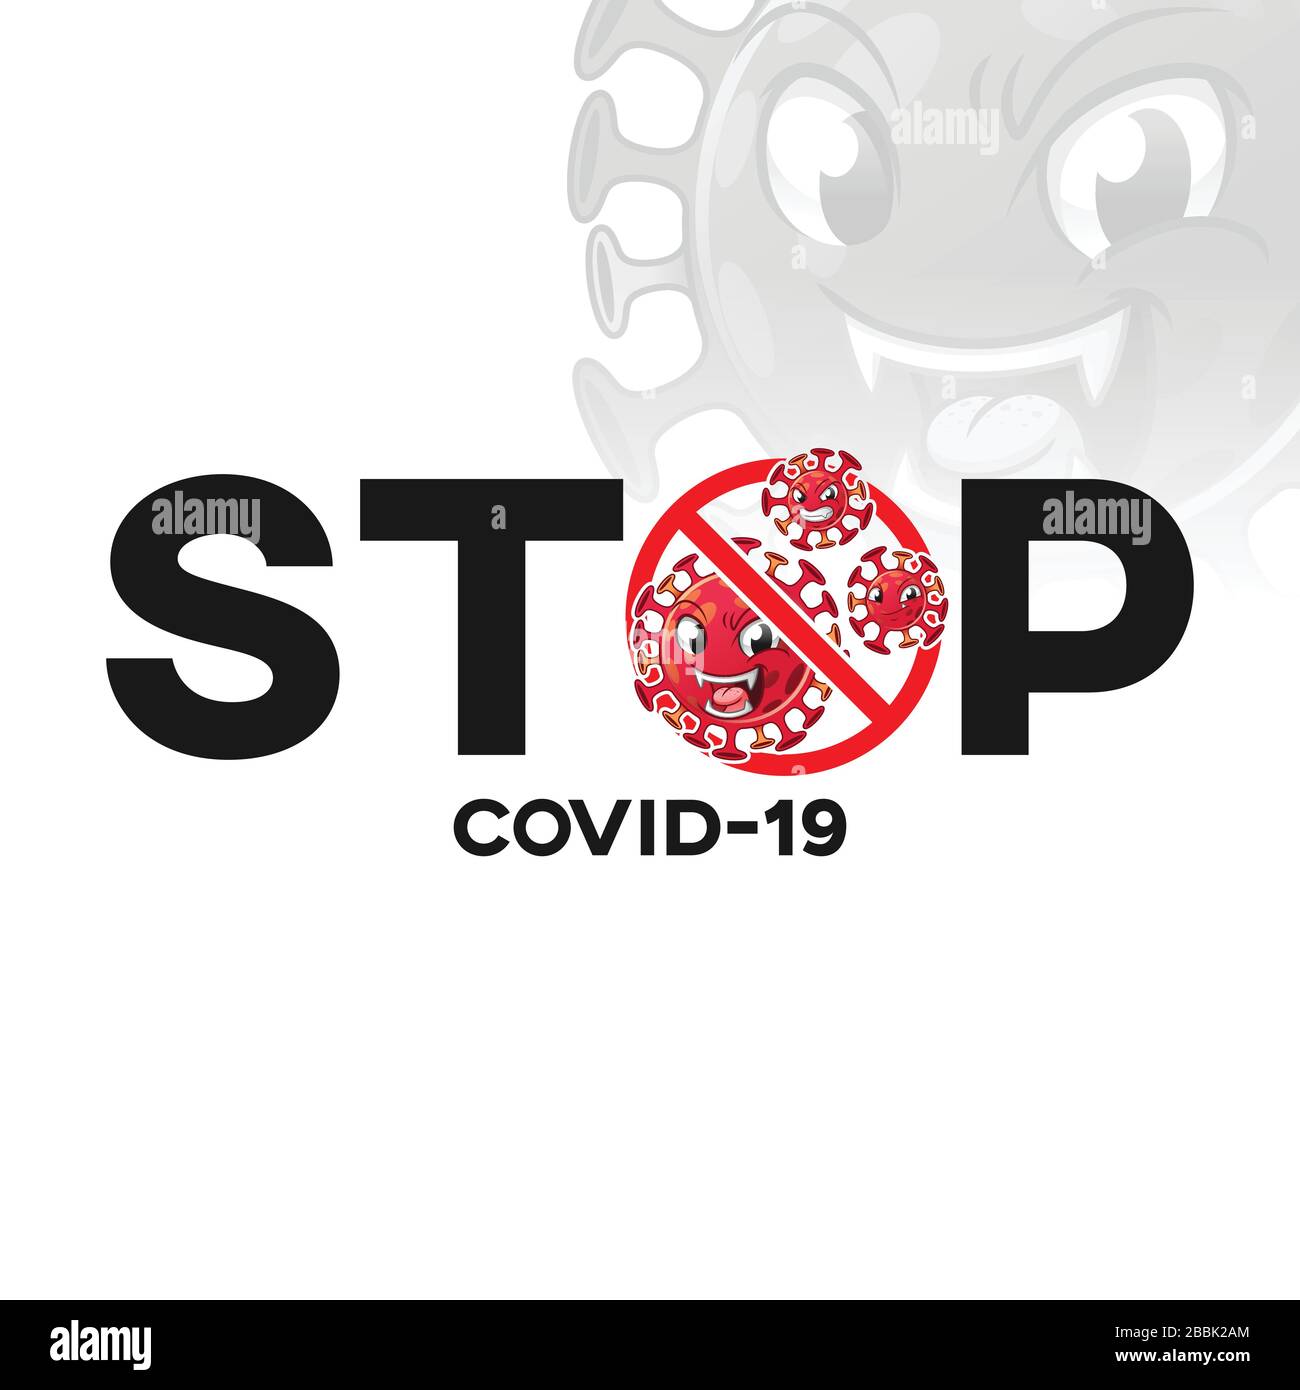 Stop COVID-19 (Coronavirus Disease 2019) Title Text Banner with Virus Mascot, Stop Spreading The Virus, Sign and Symbol, Cartoon Vector Illustration. Stock Vector